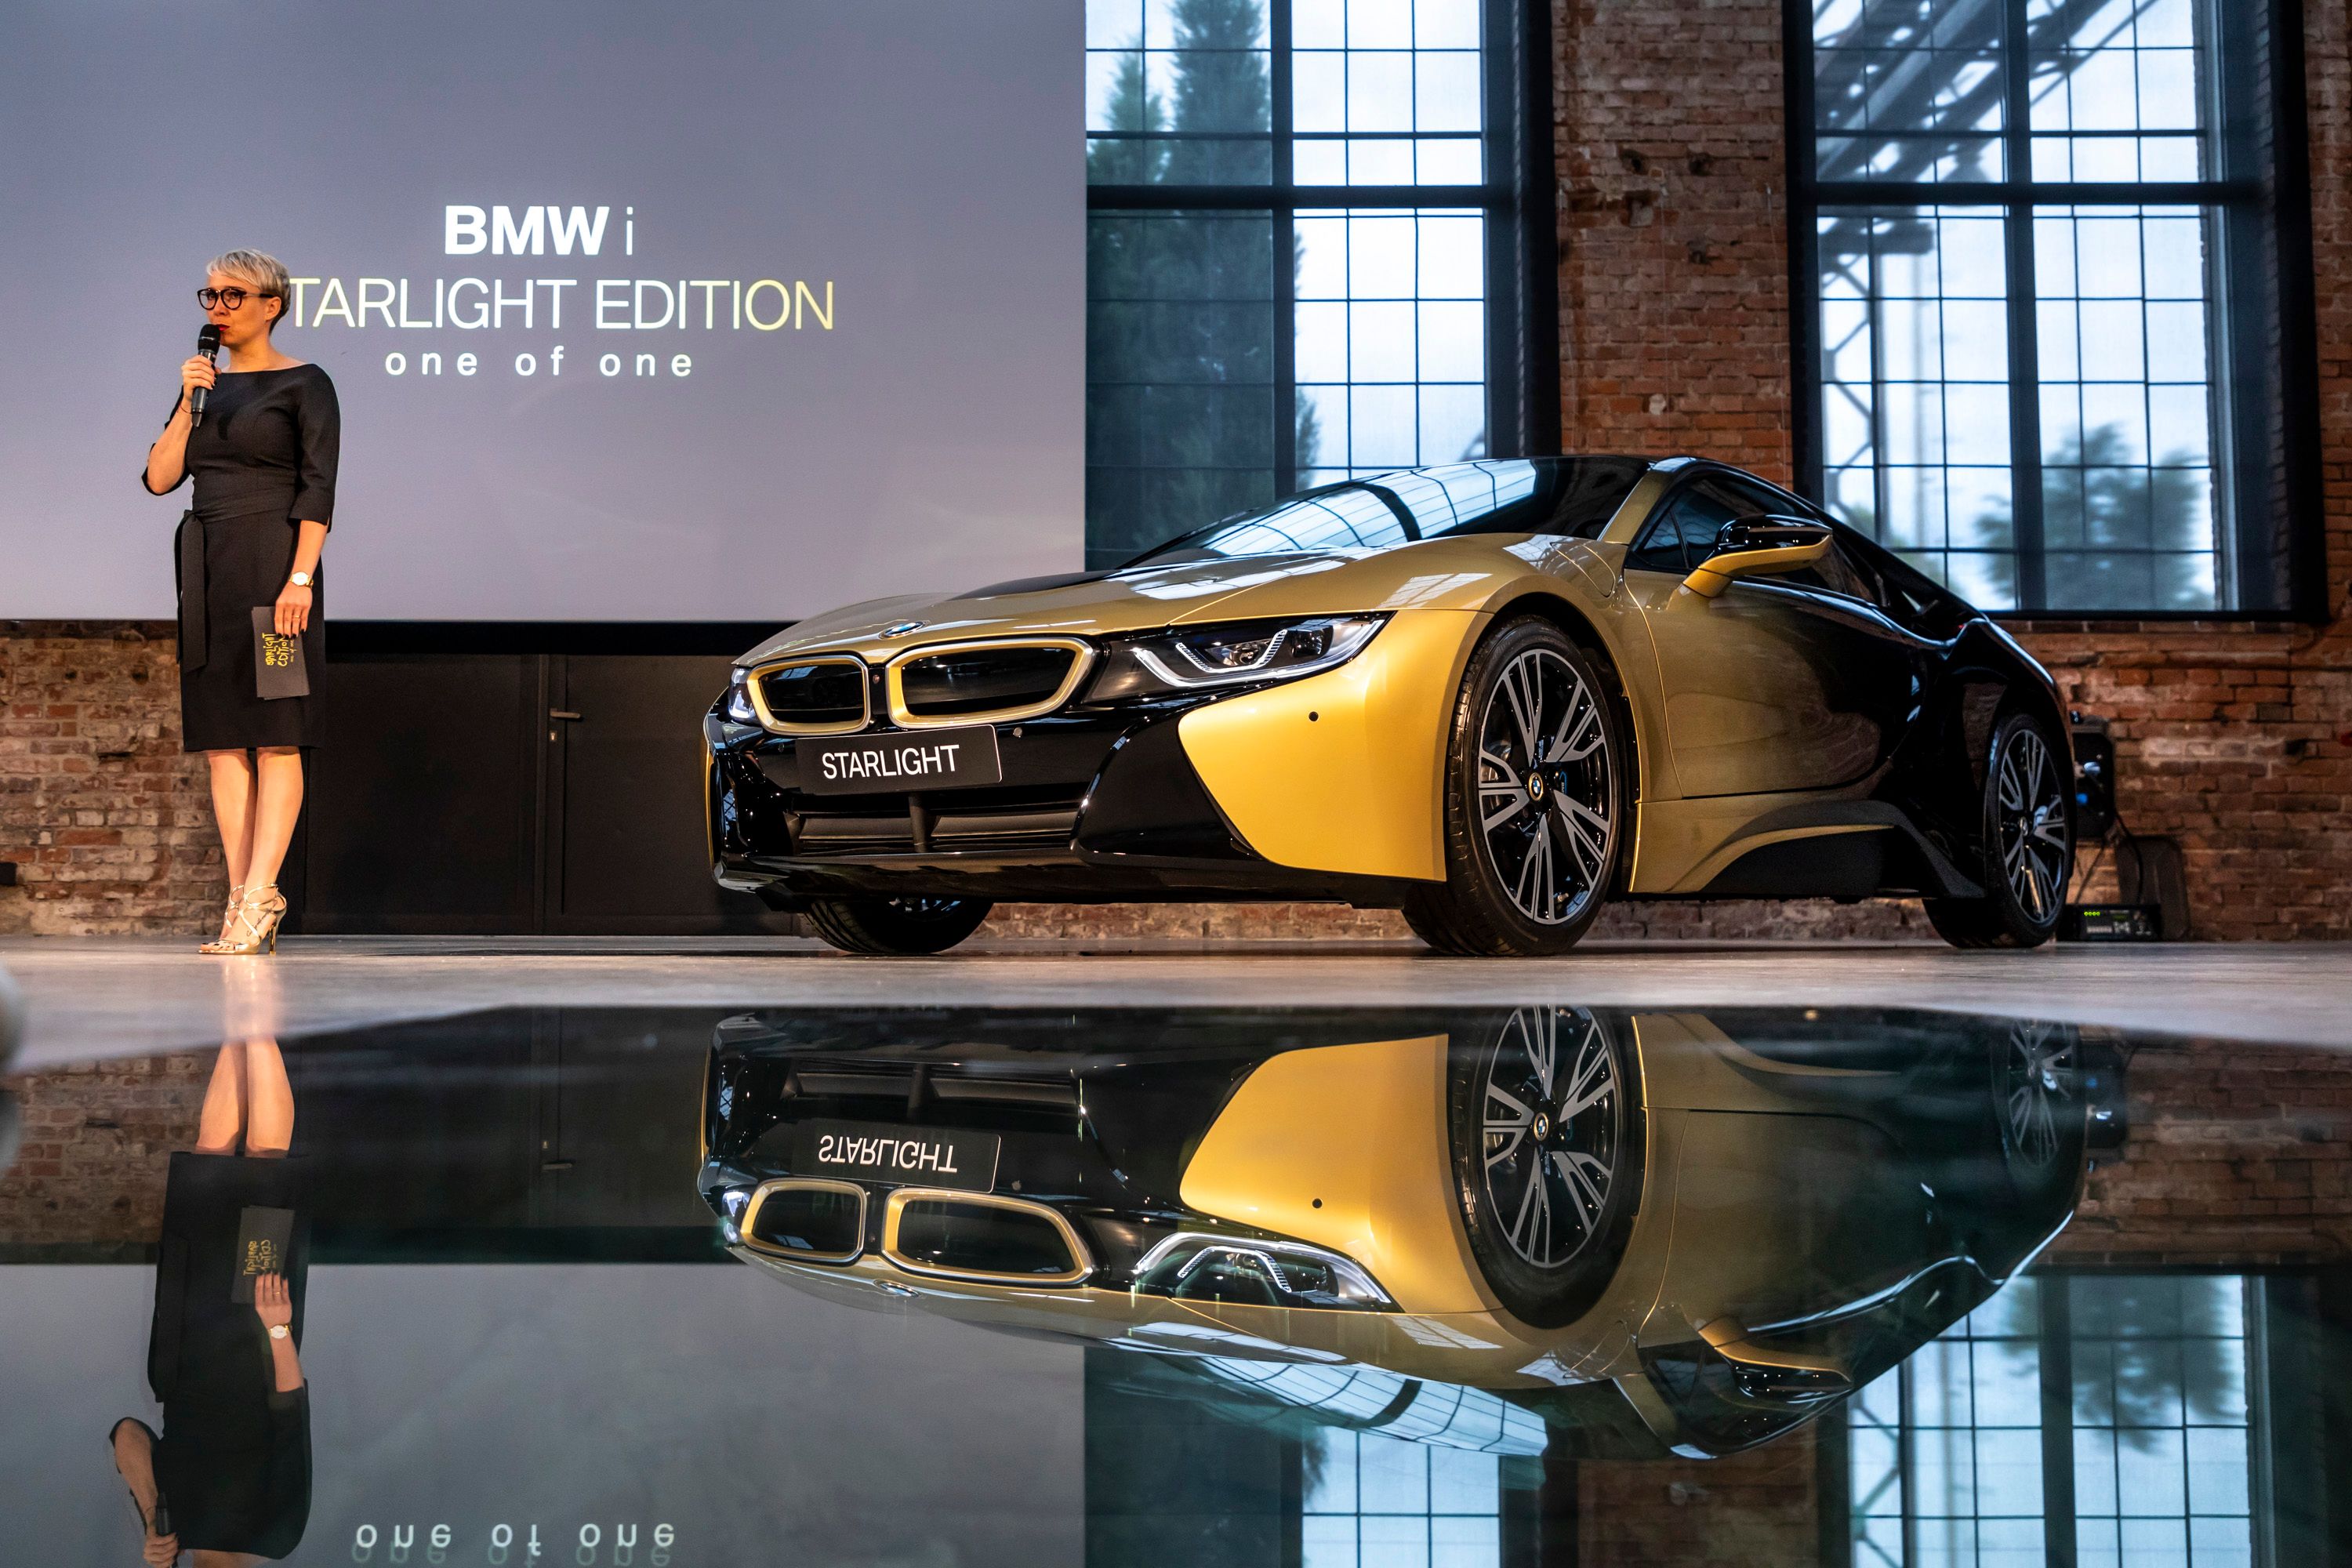 2018 BMW i8 and i3 Starlight Edition